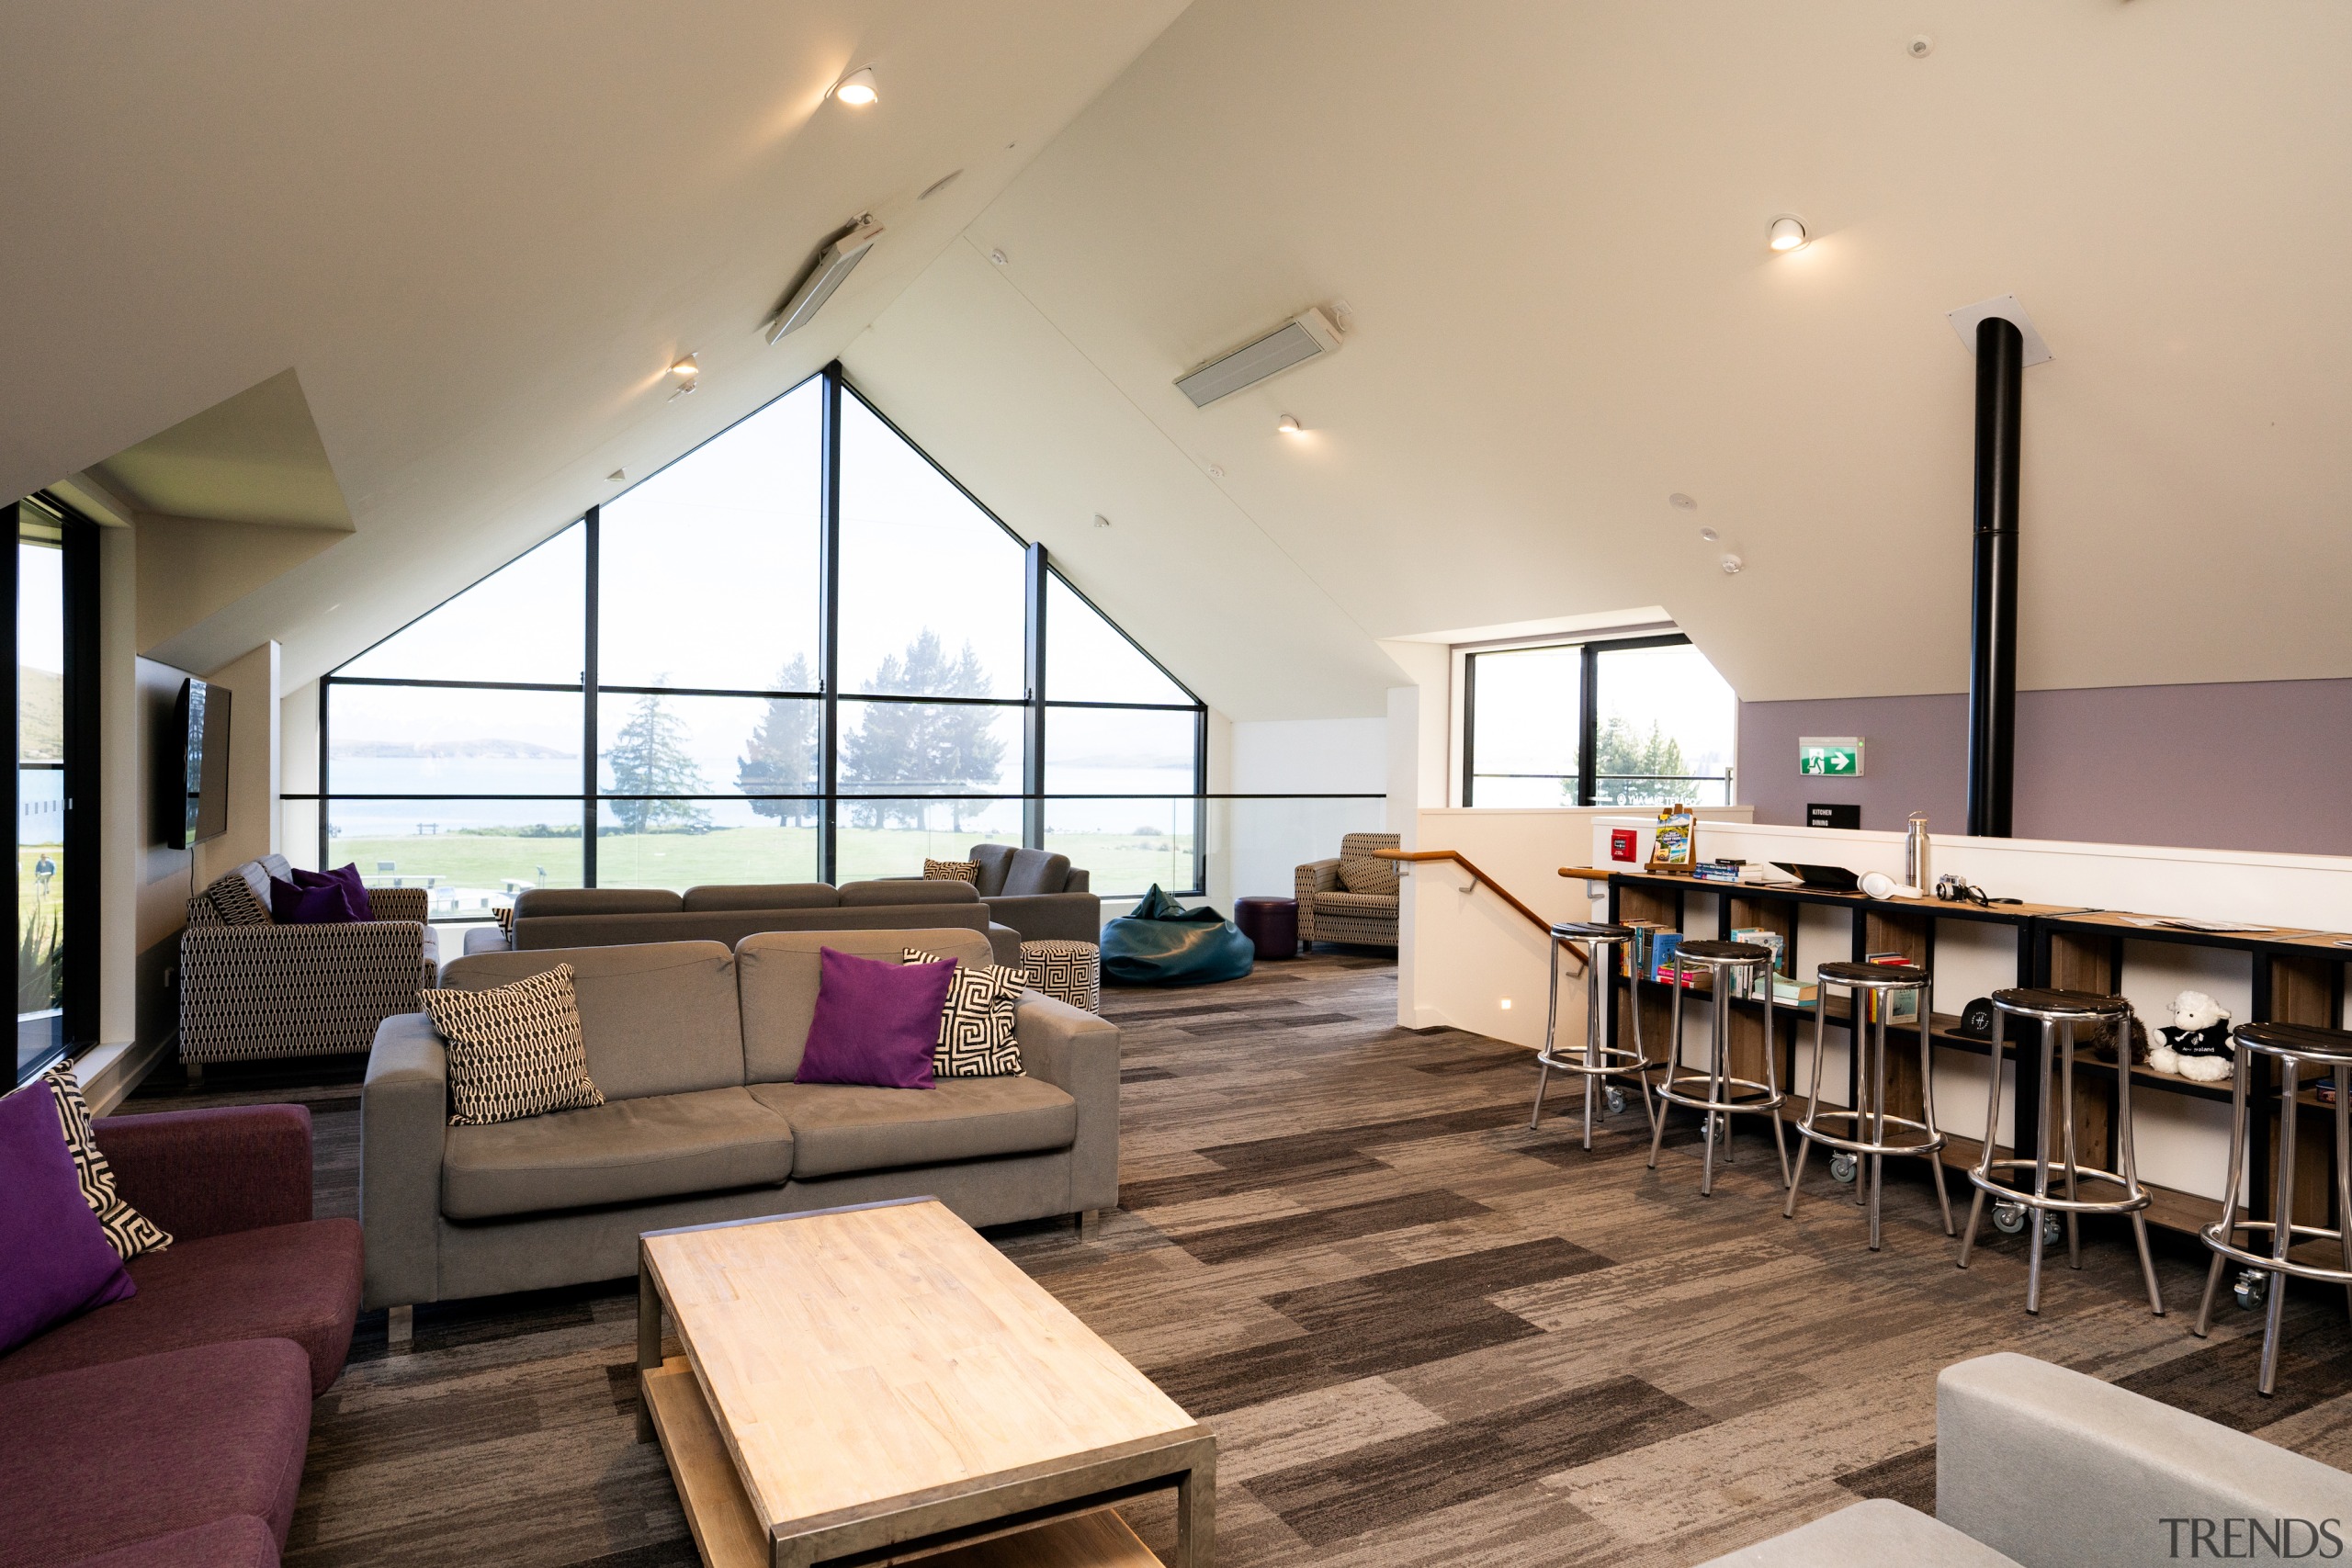 Communal living space. - Design driven hostels cater 